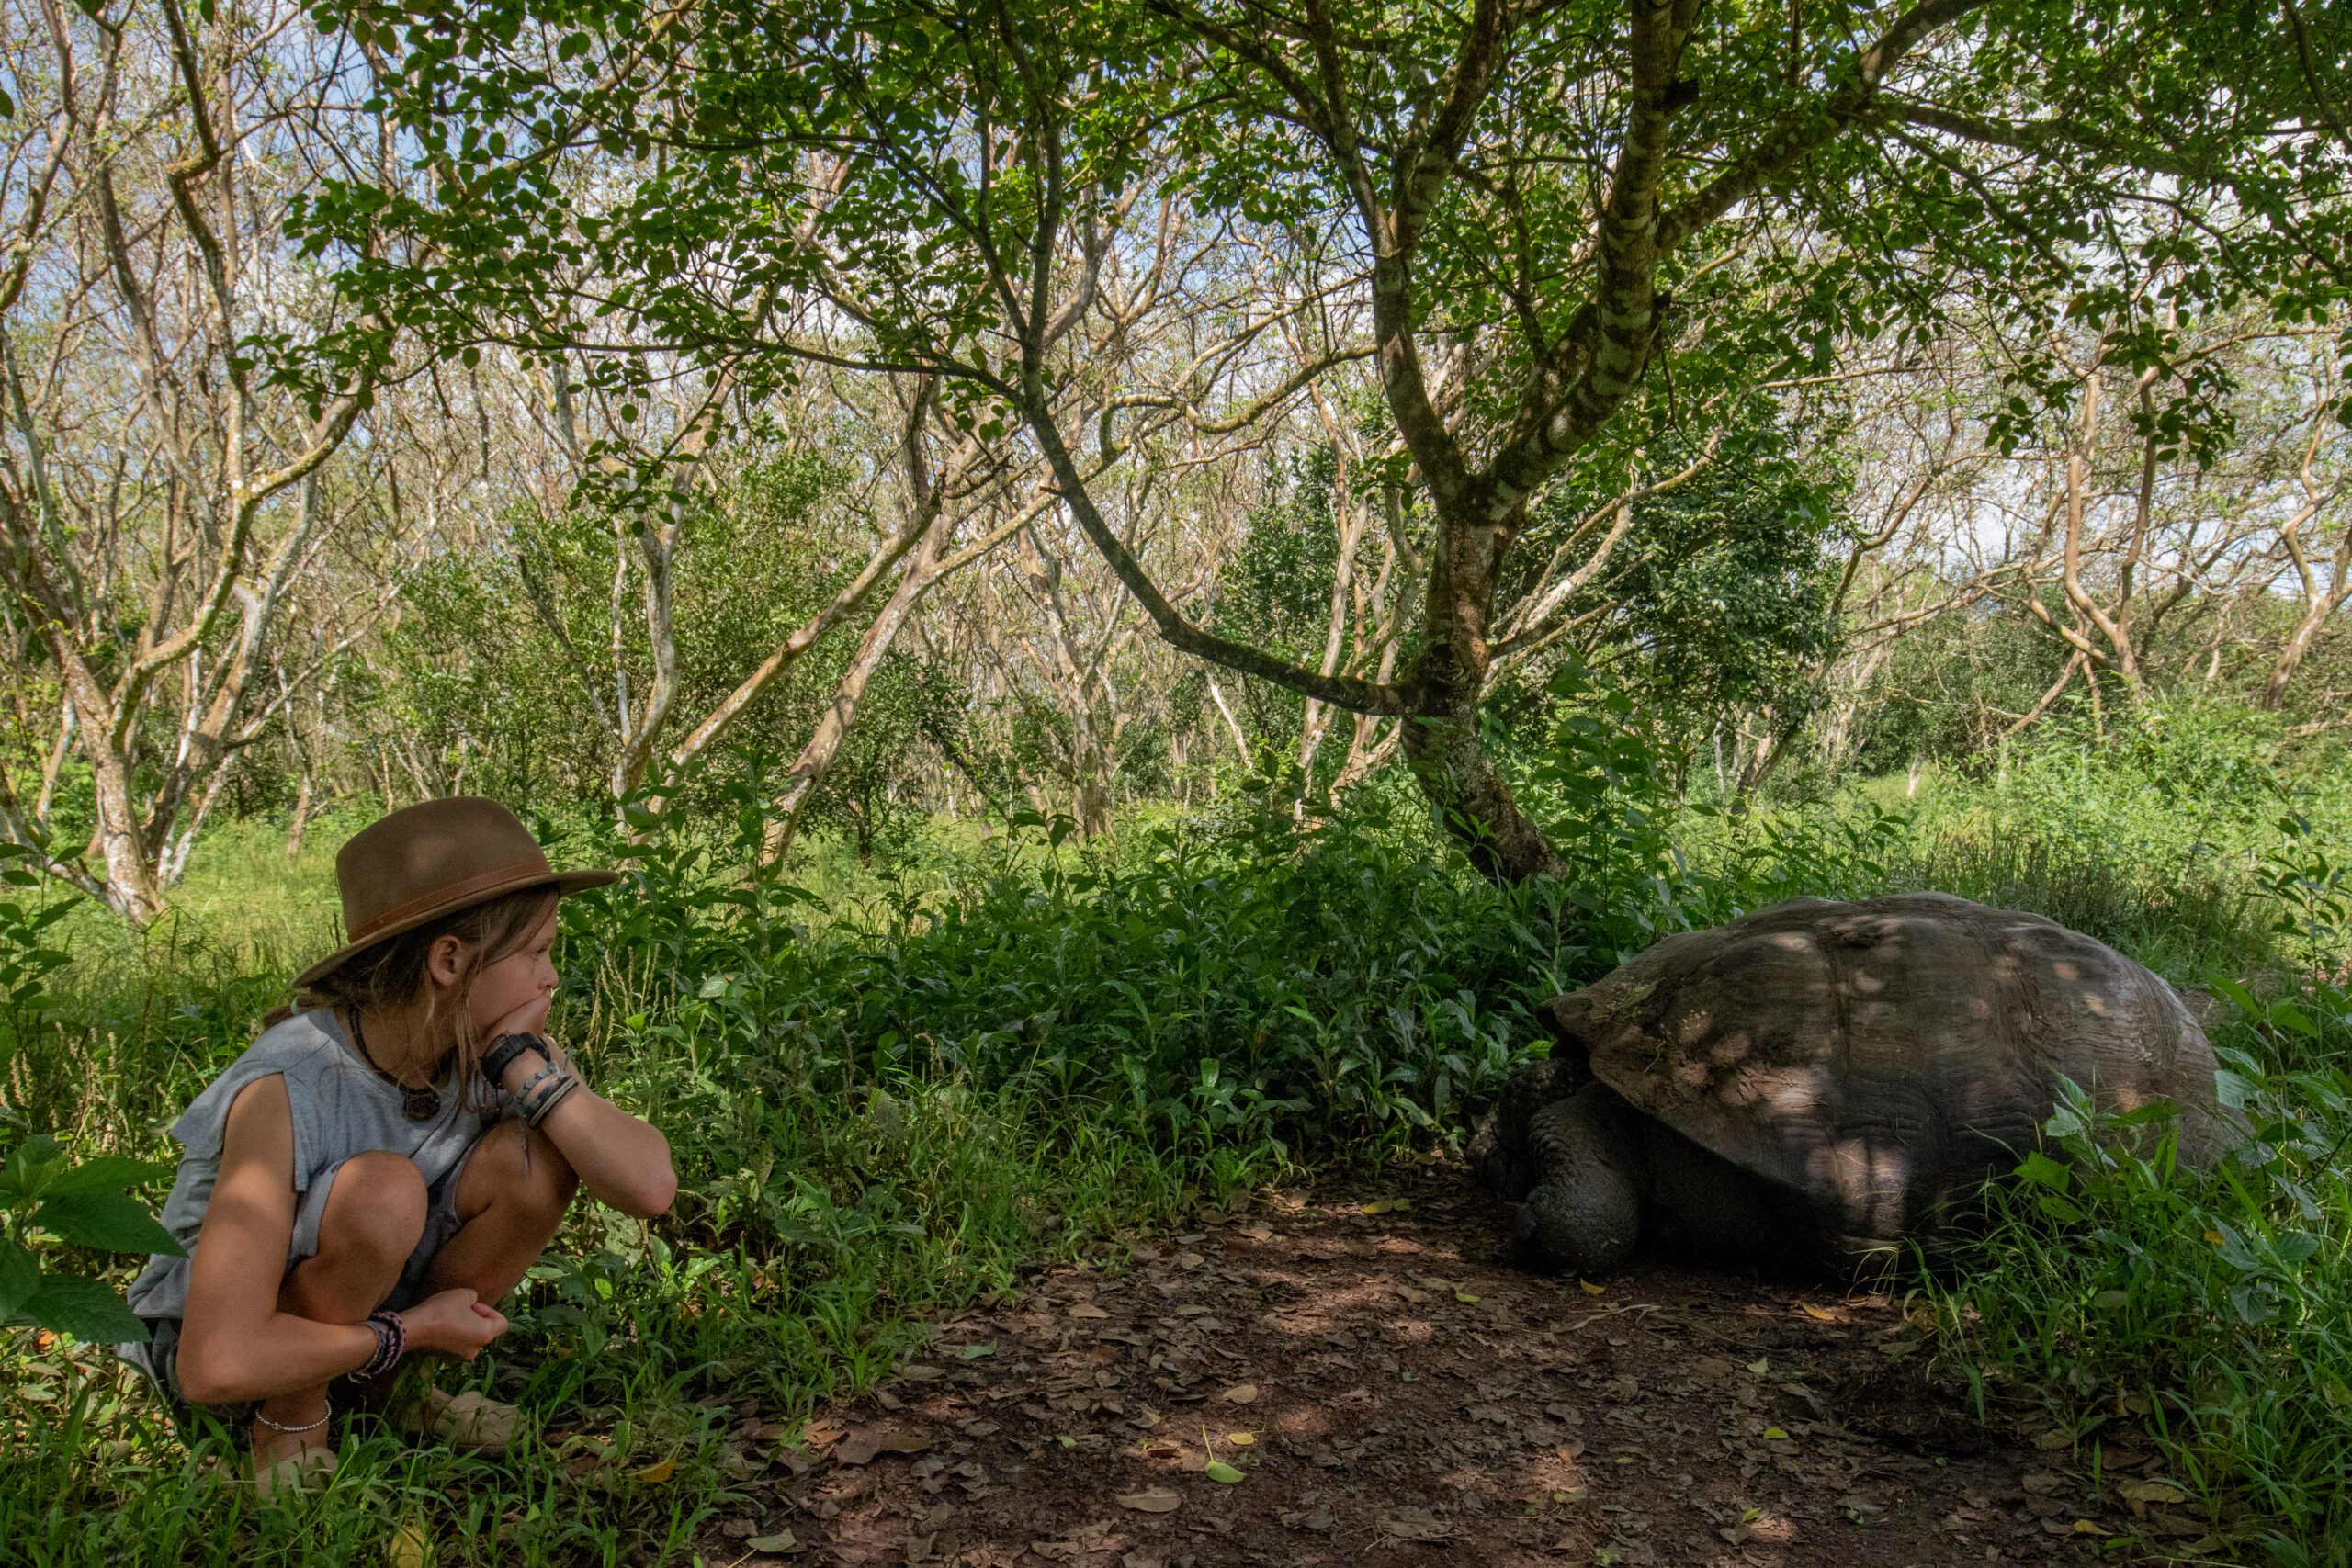 A child crouching near a giant tortoise